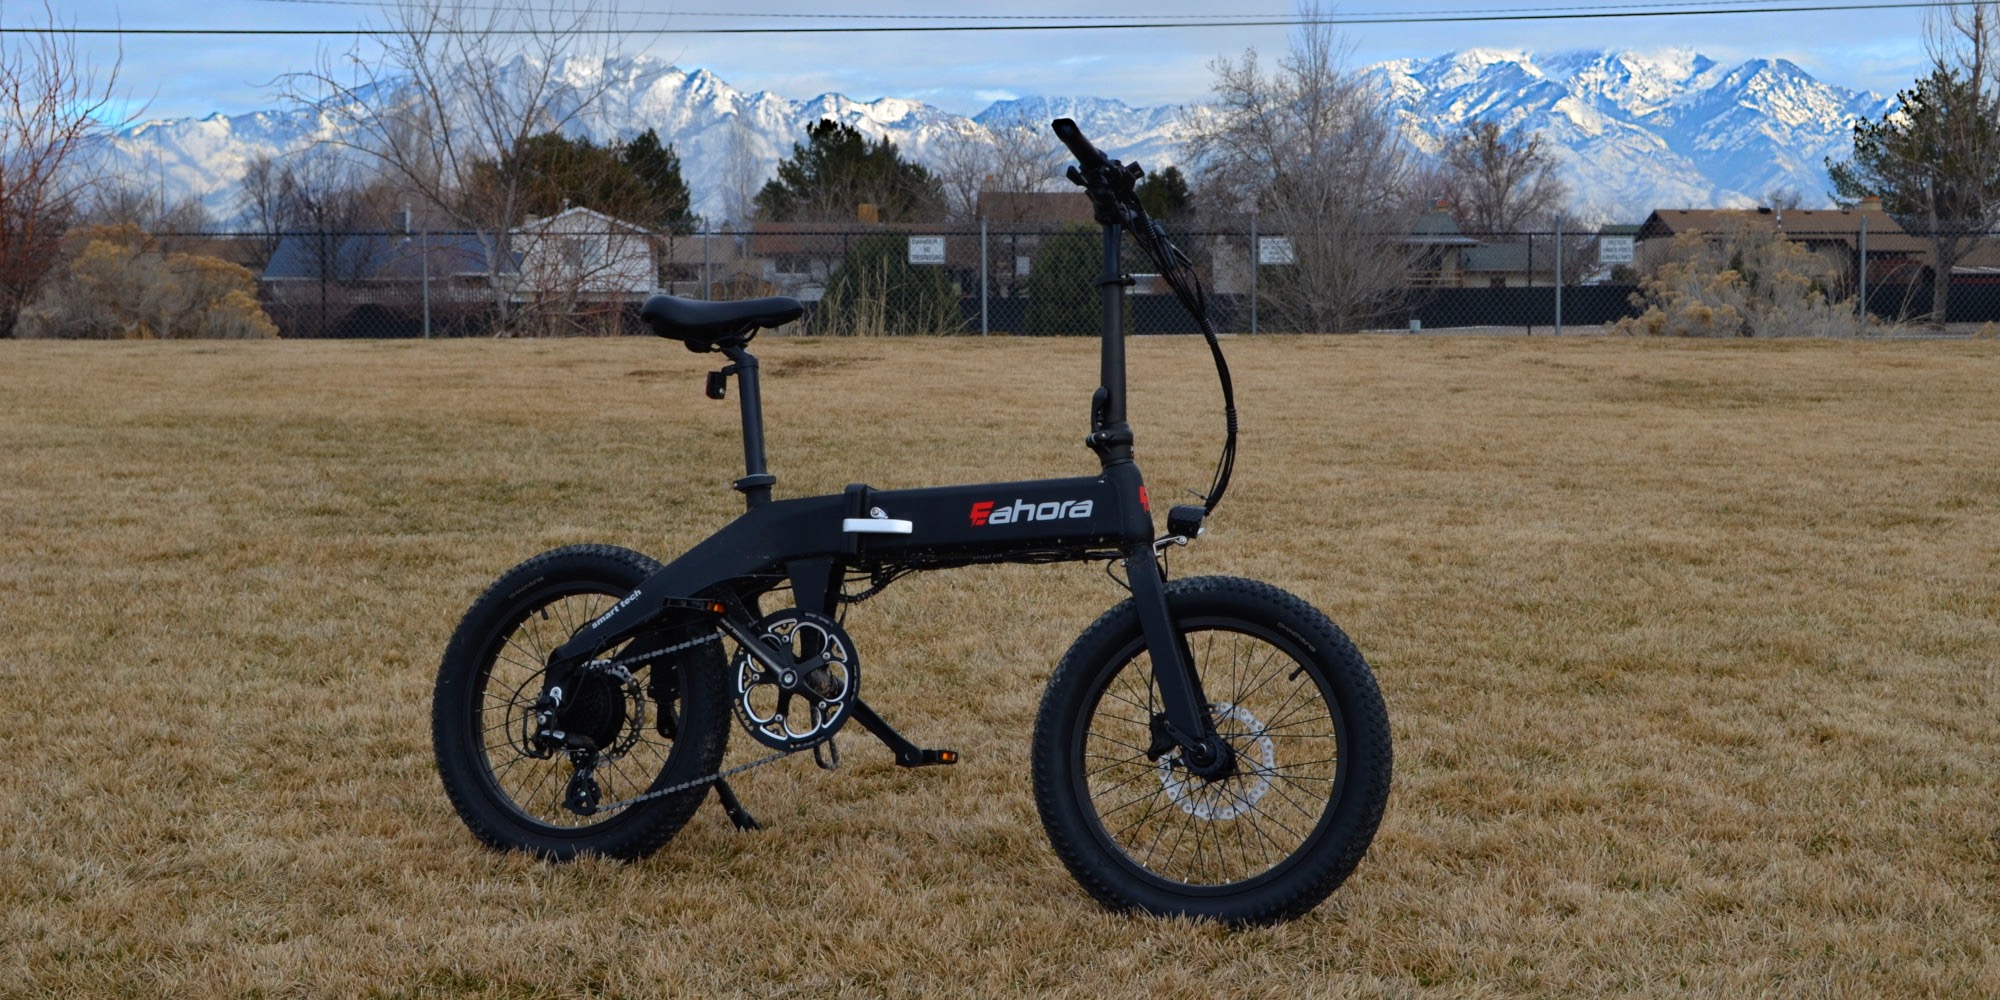 eahora electric mountain bike